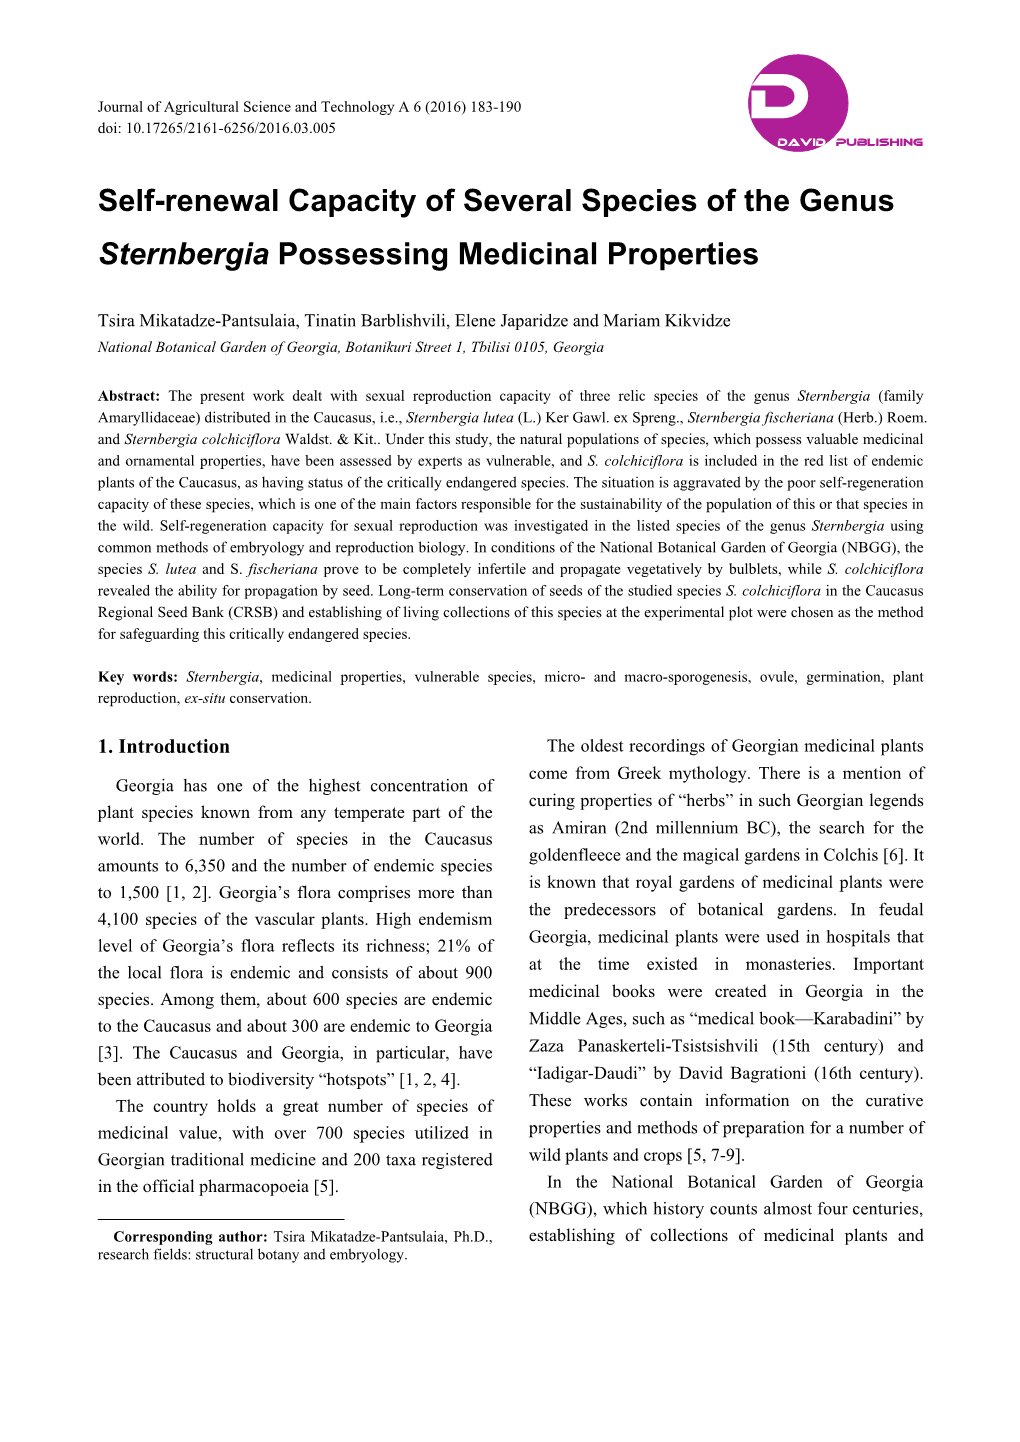 Self-Renewal Capacity of Several Species of the Genus Sternbergia Possessing Medicinal Properties